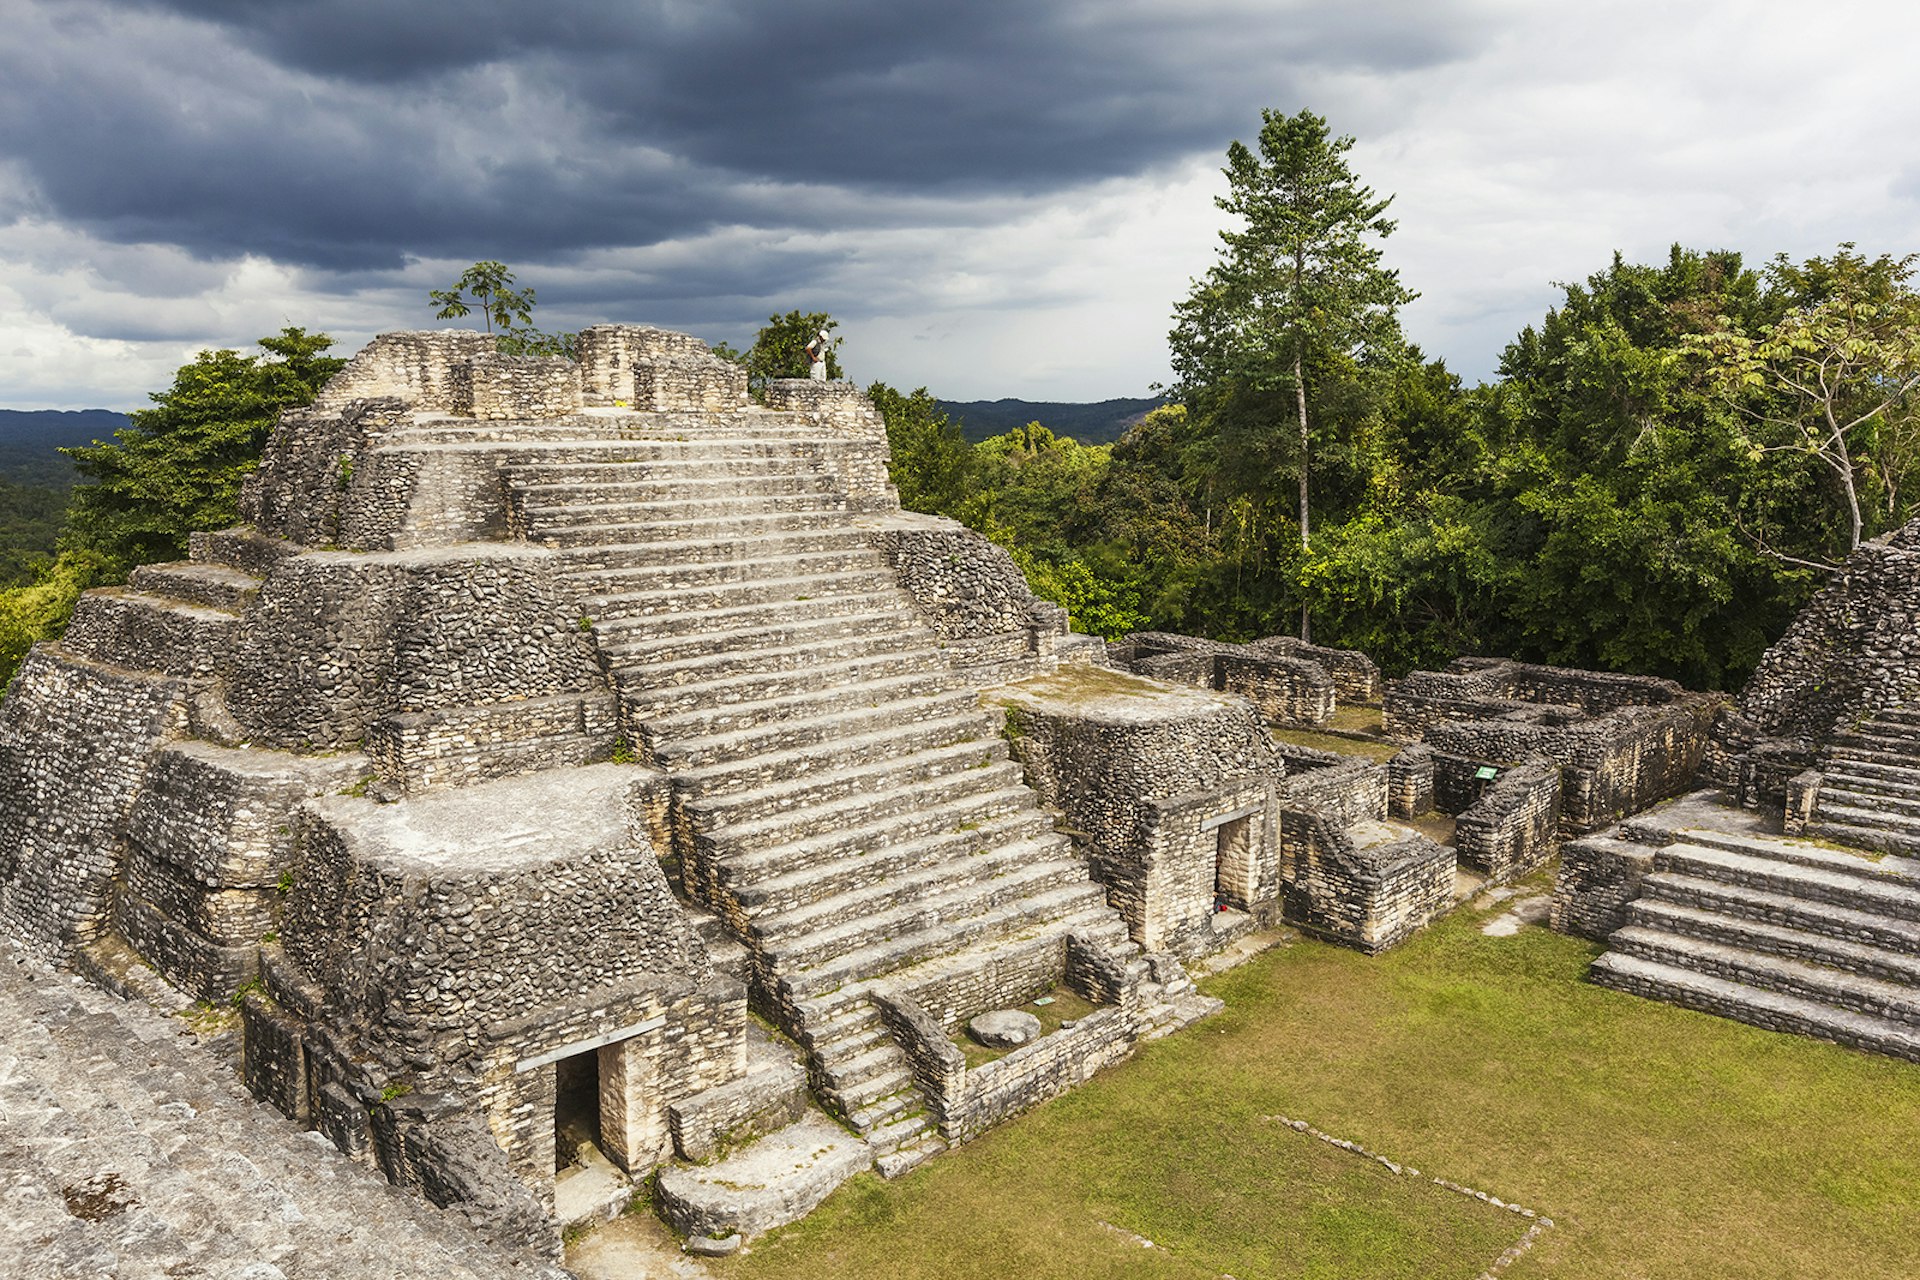 The impressive Maya ruins at Caracol © Patrick Endres / Design Pics / Getty Images